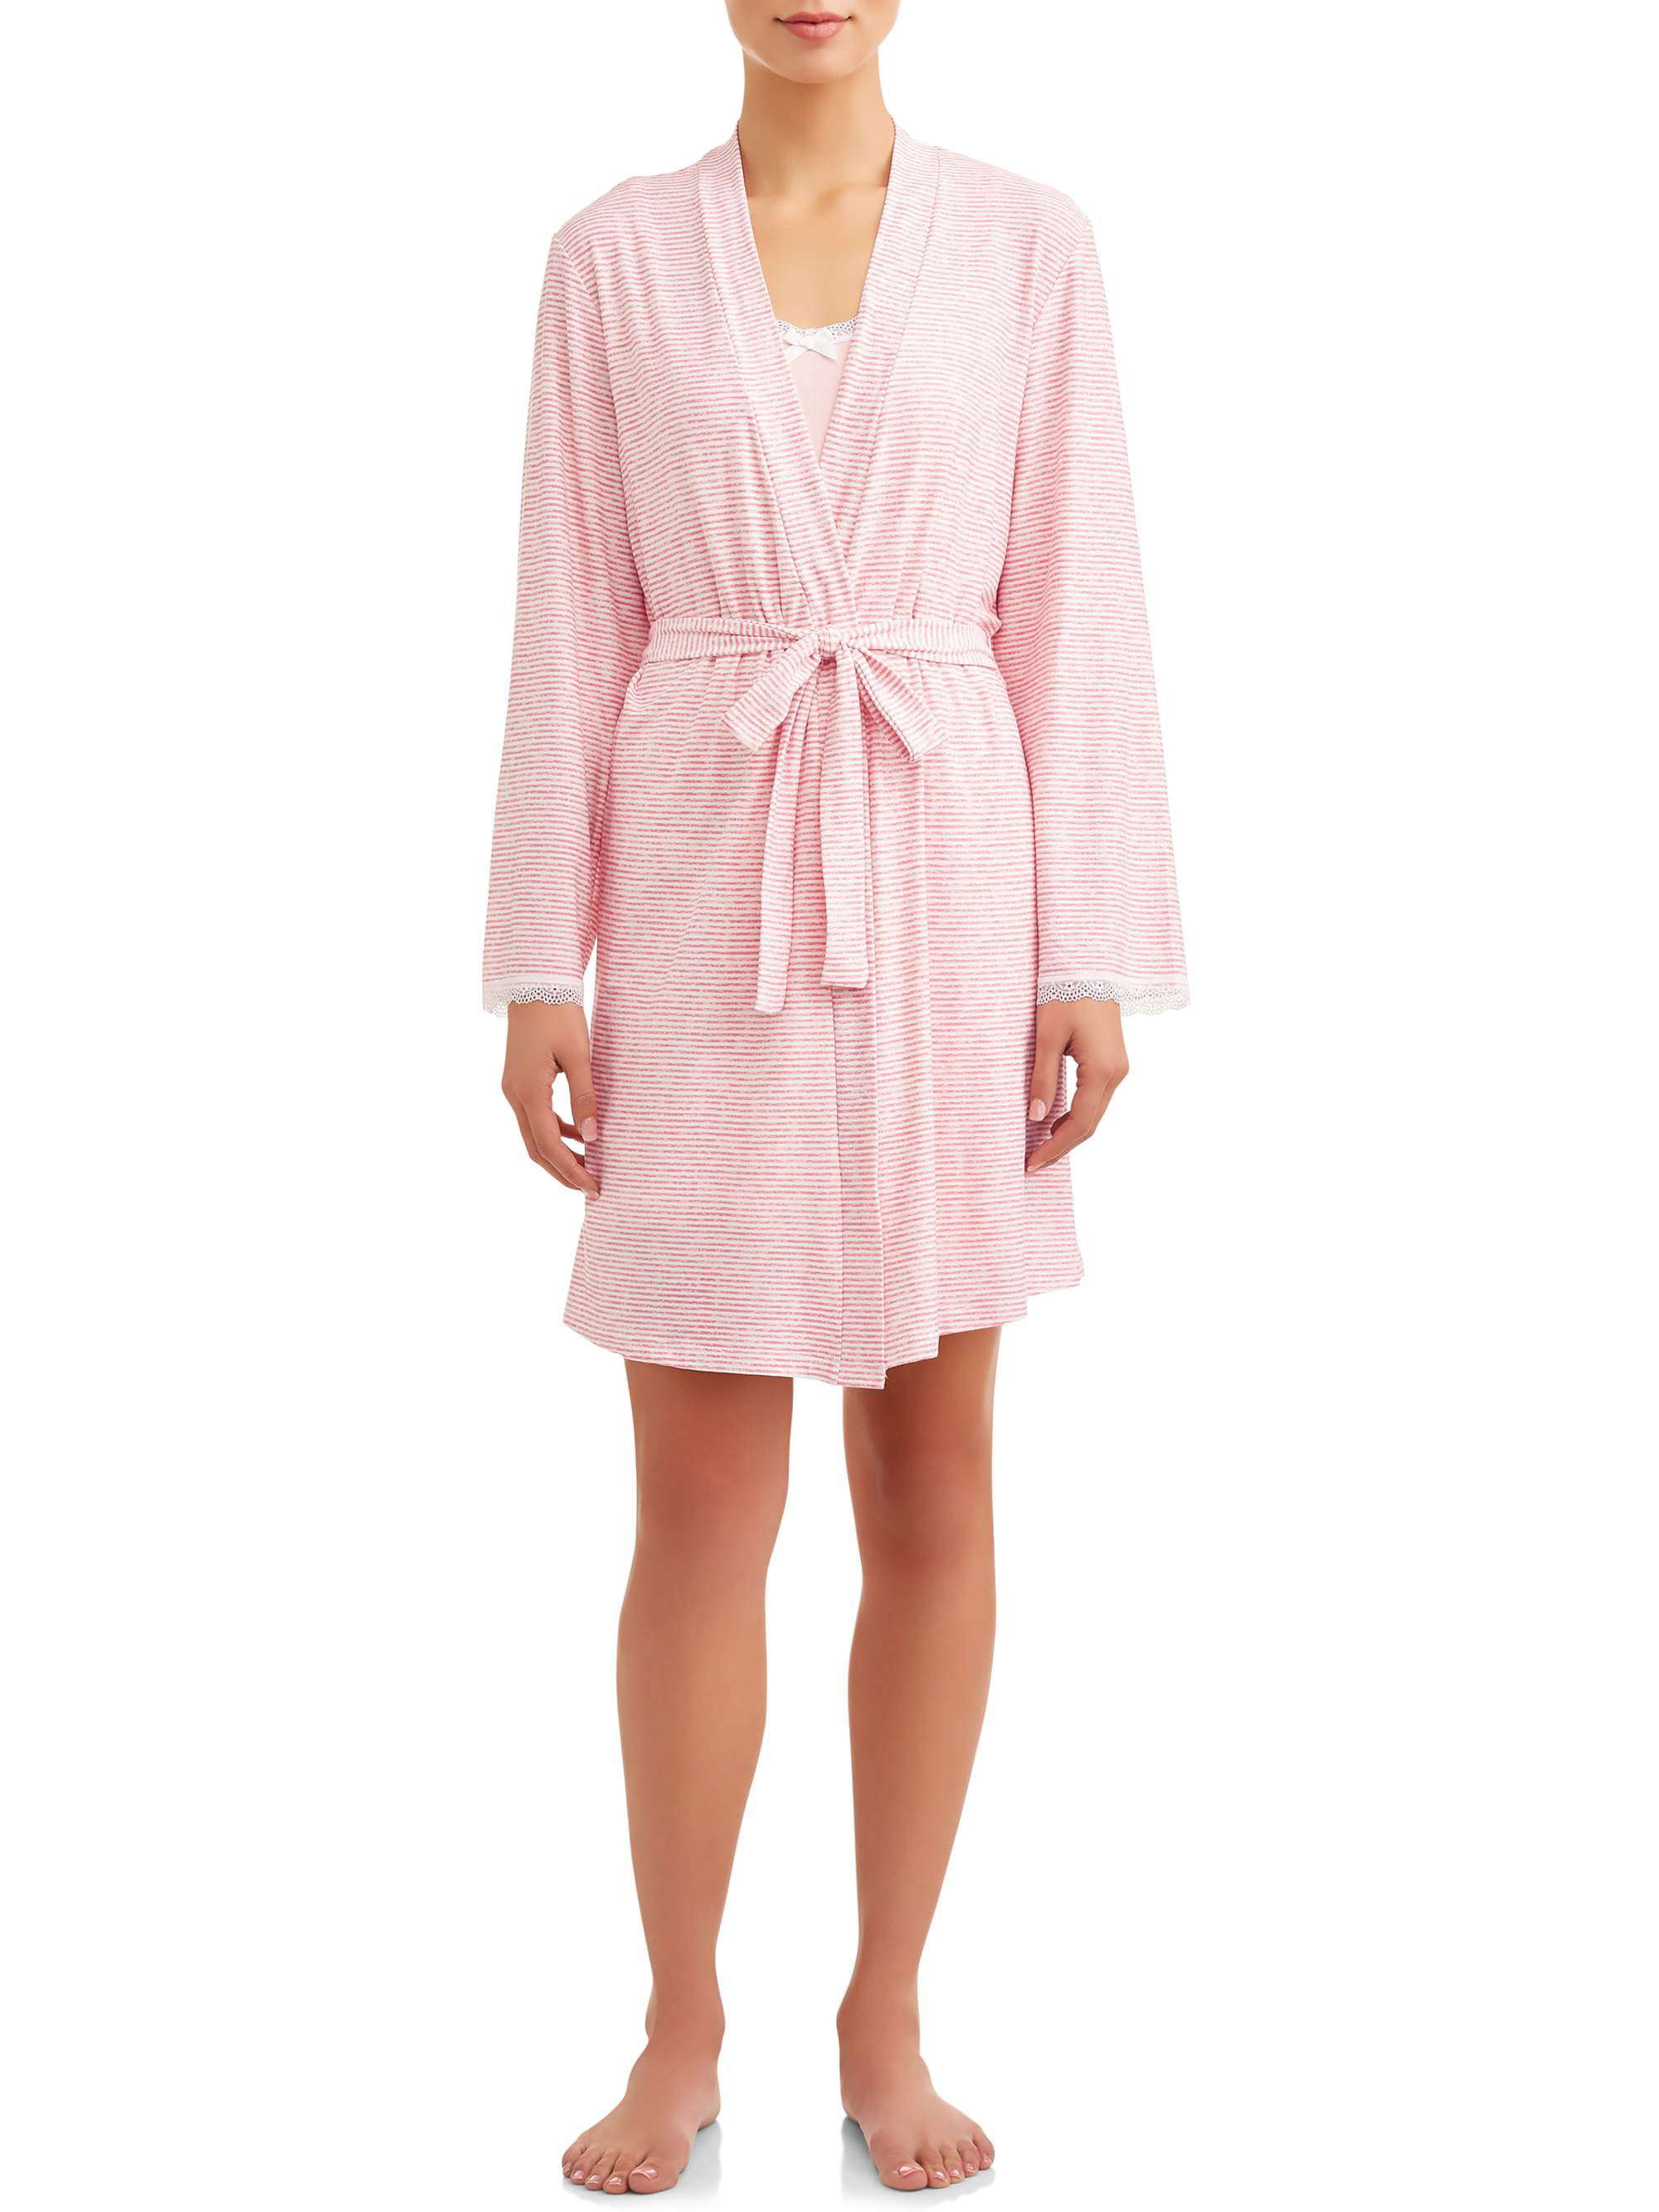 Details about   Coral Fleece Robe Kimono Thick Warm Nightgown Sleepwear Women Casual Home Wear